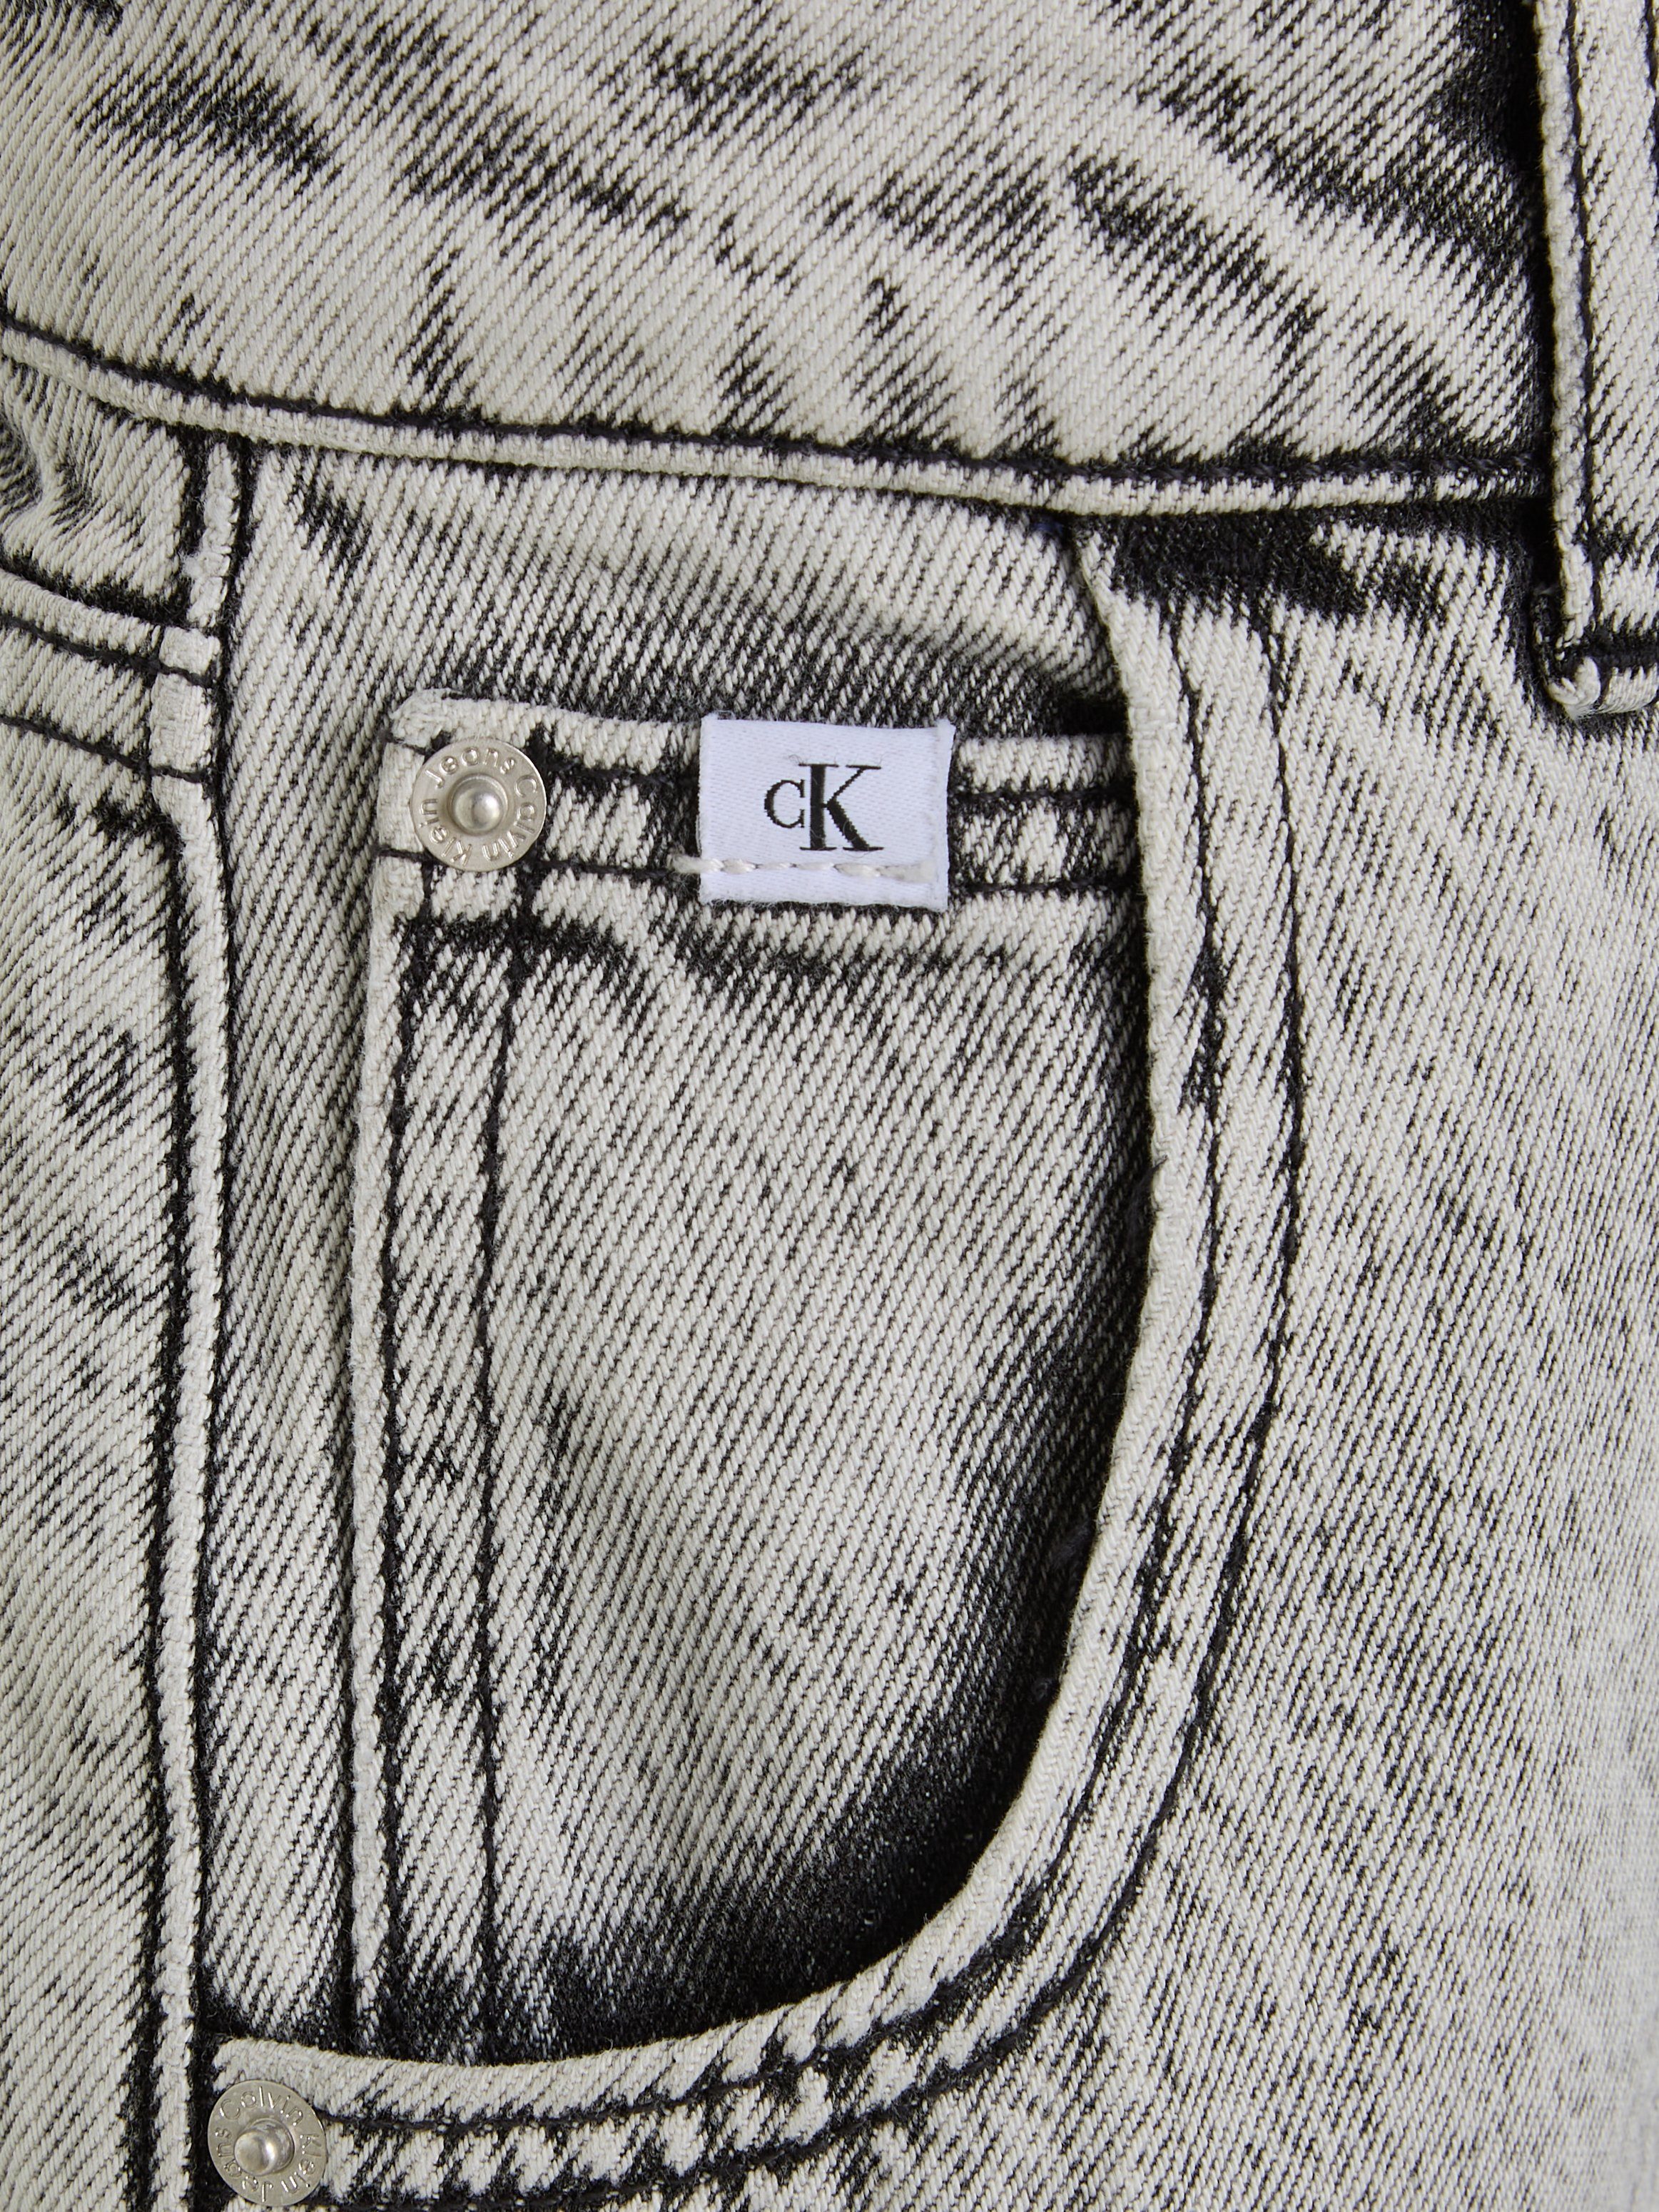 BARREL Jeans Klein Calvin LIGHT STONE GREY 5-Poket-Style im Straight-Jeans